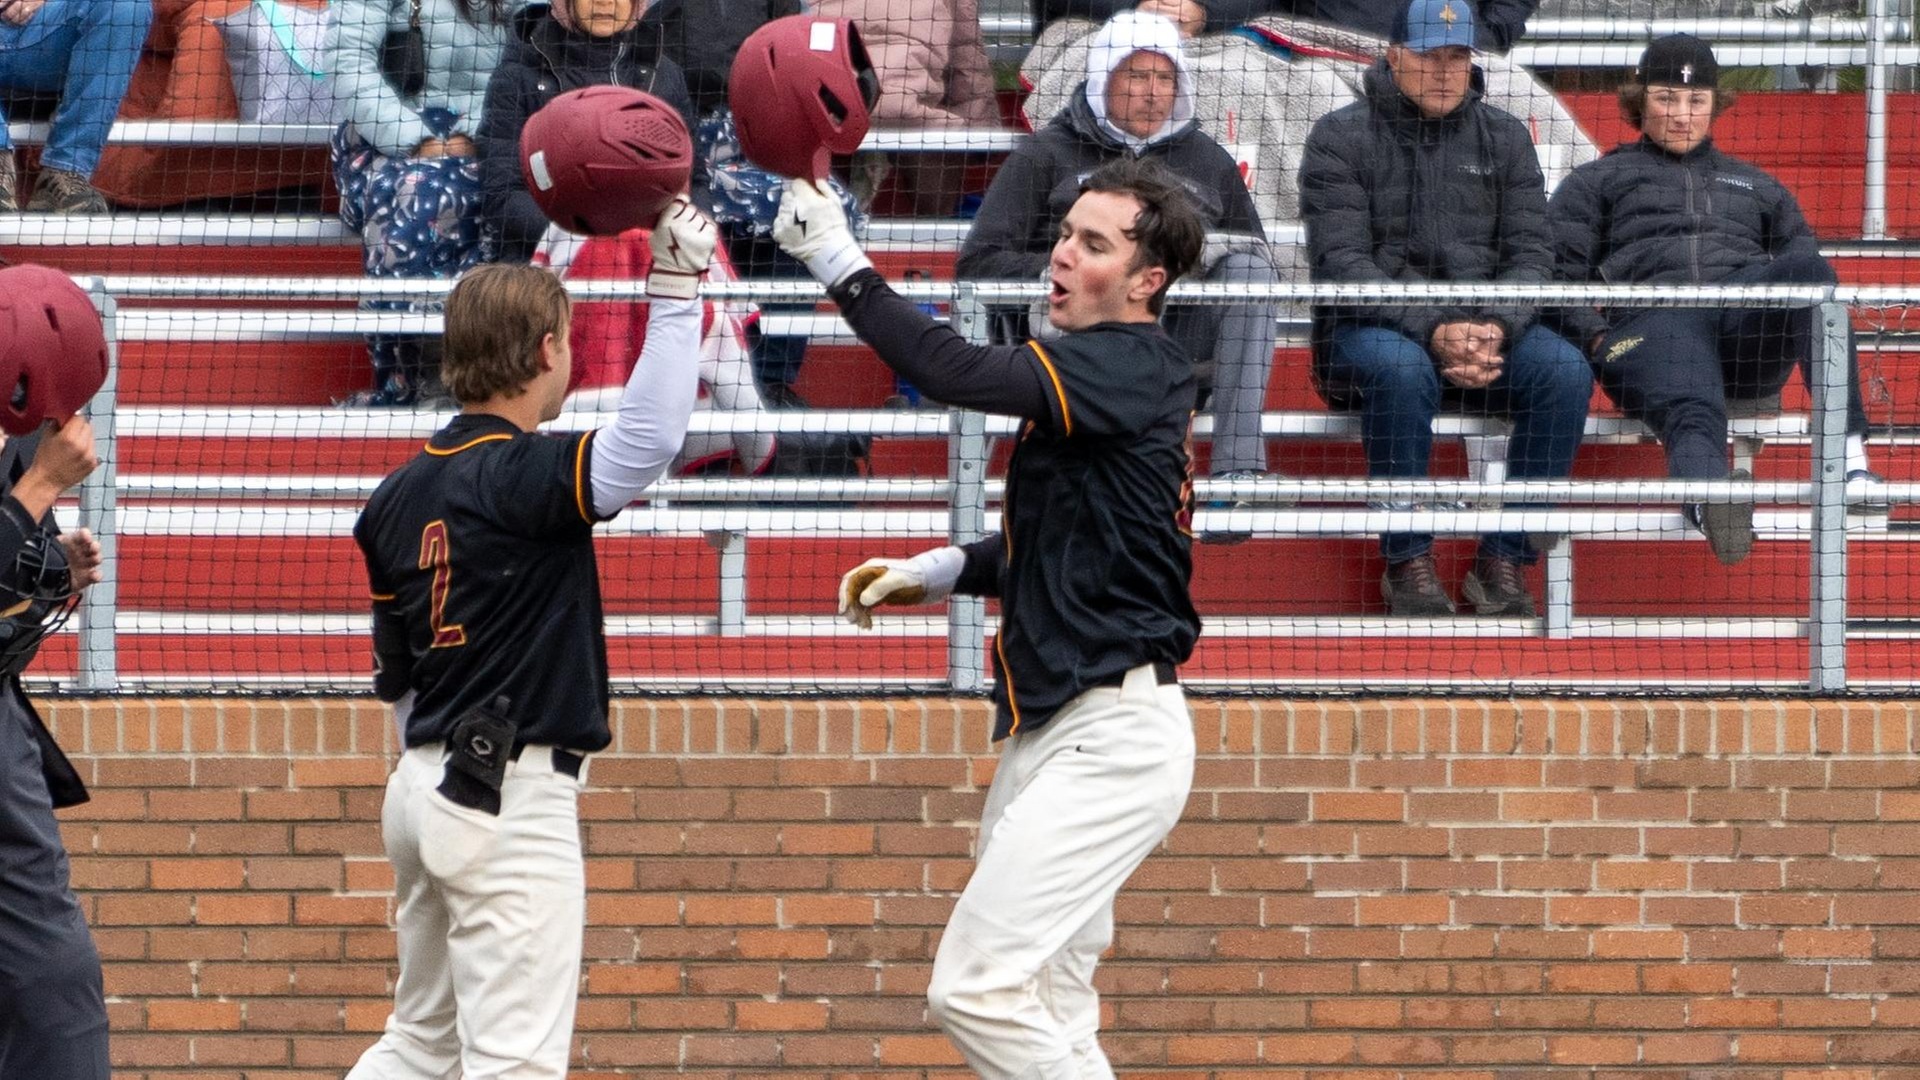 Bryce Didrickson (right) celebrates one of his home runs (photo by Caleb Flegel)